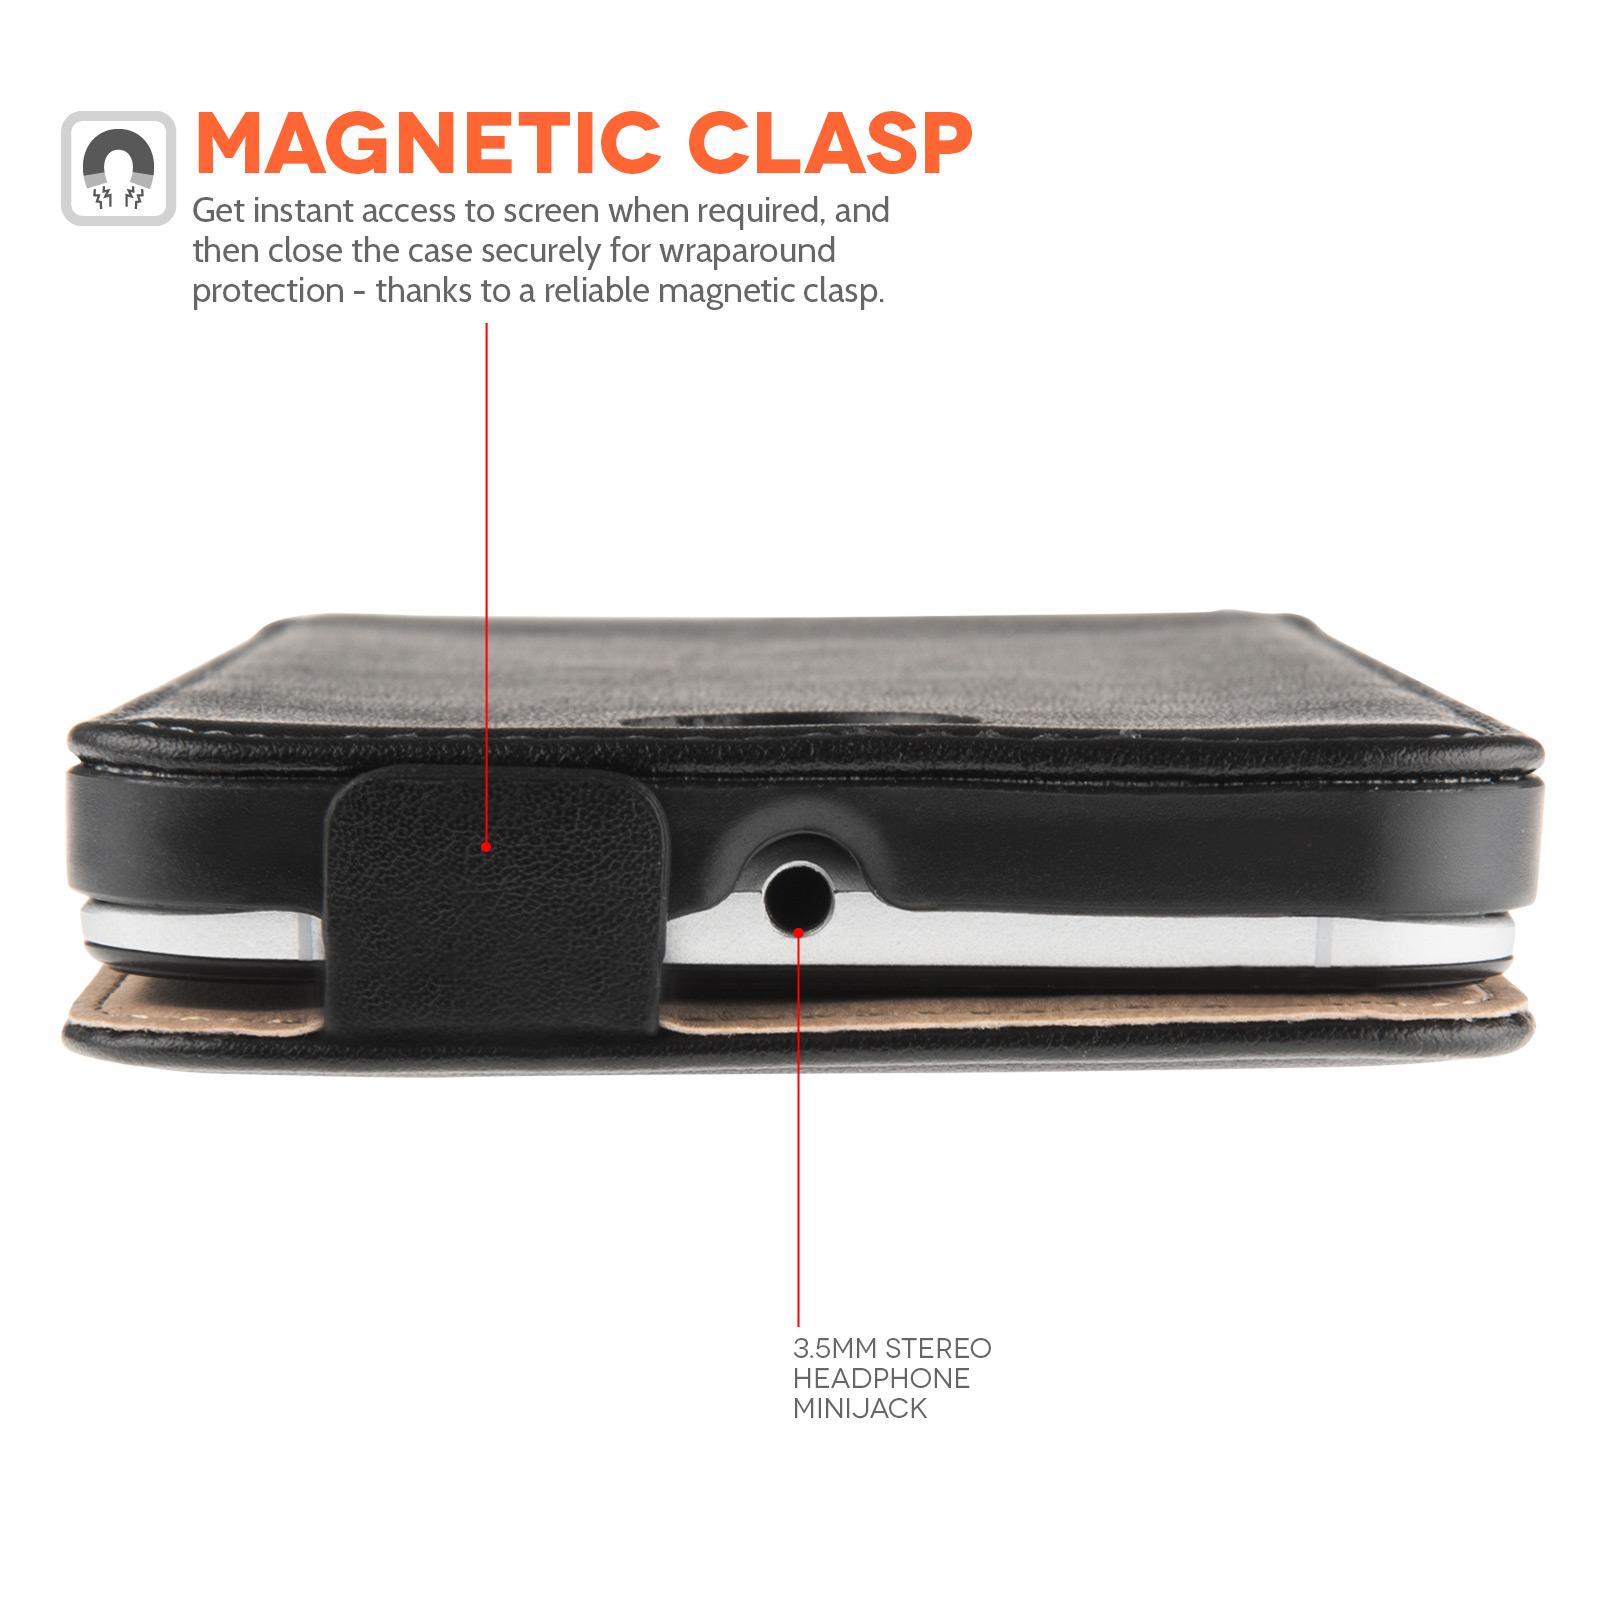 Caseflex Google Nexus 6 Real Leather Flip Case - Black